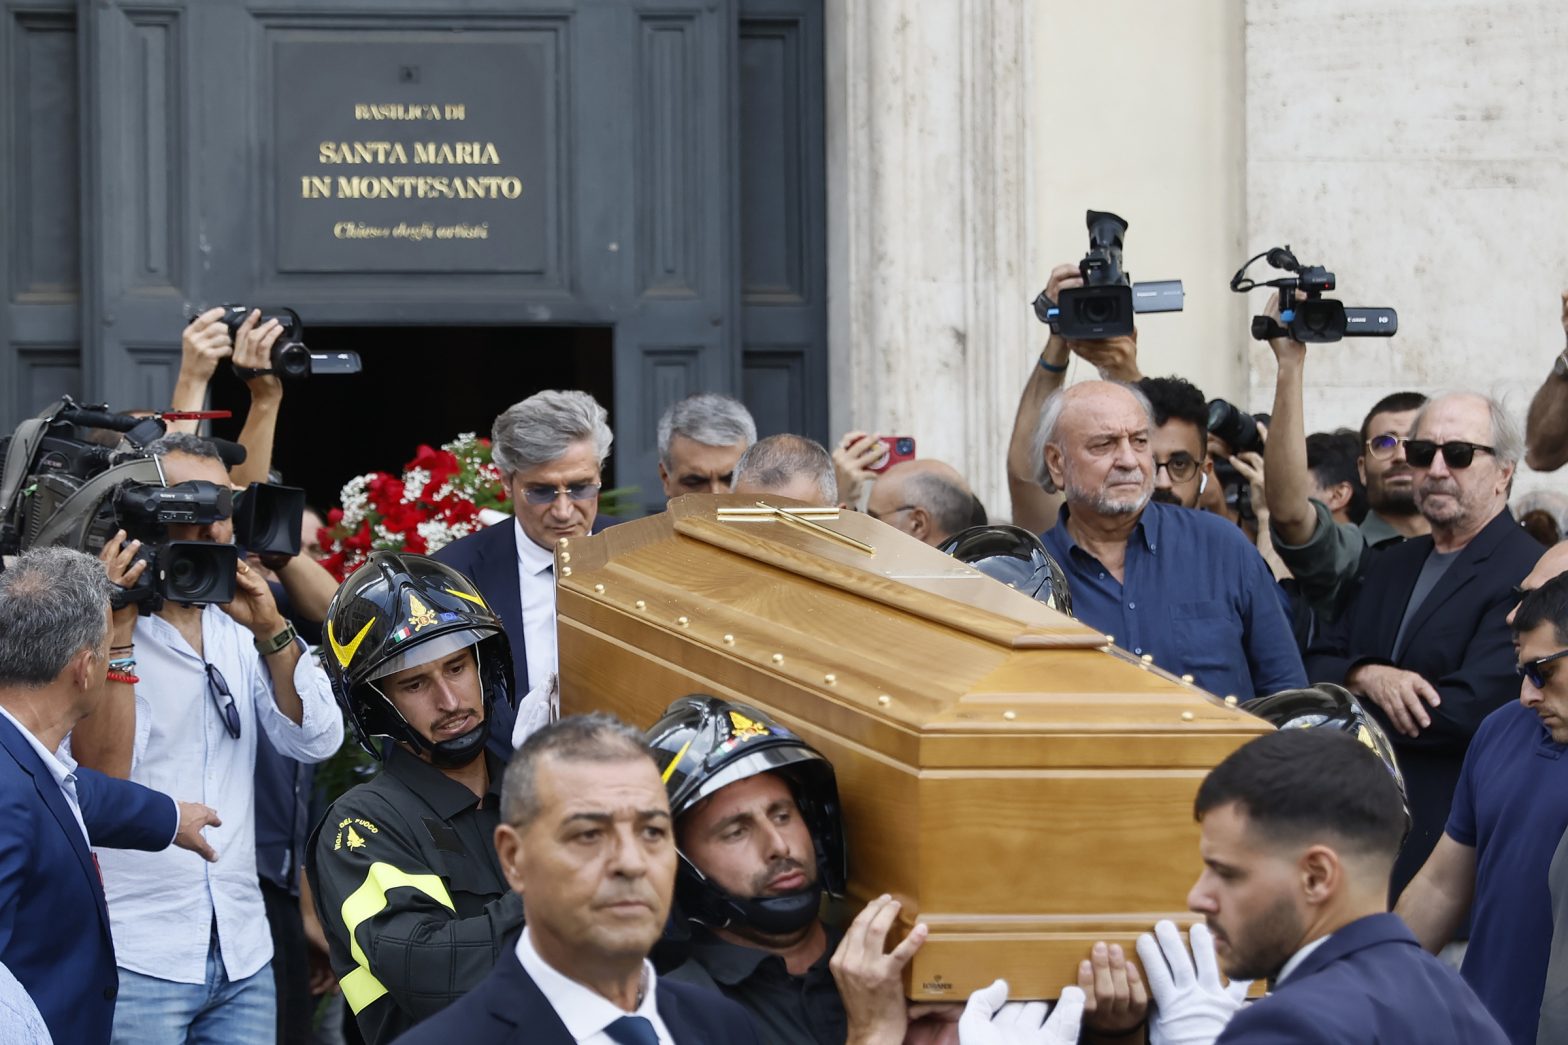 Andrea Purgatori, folla ai funerali - MetroNews